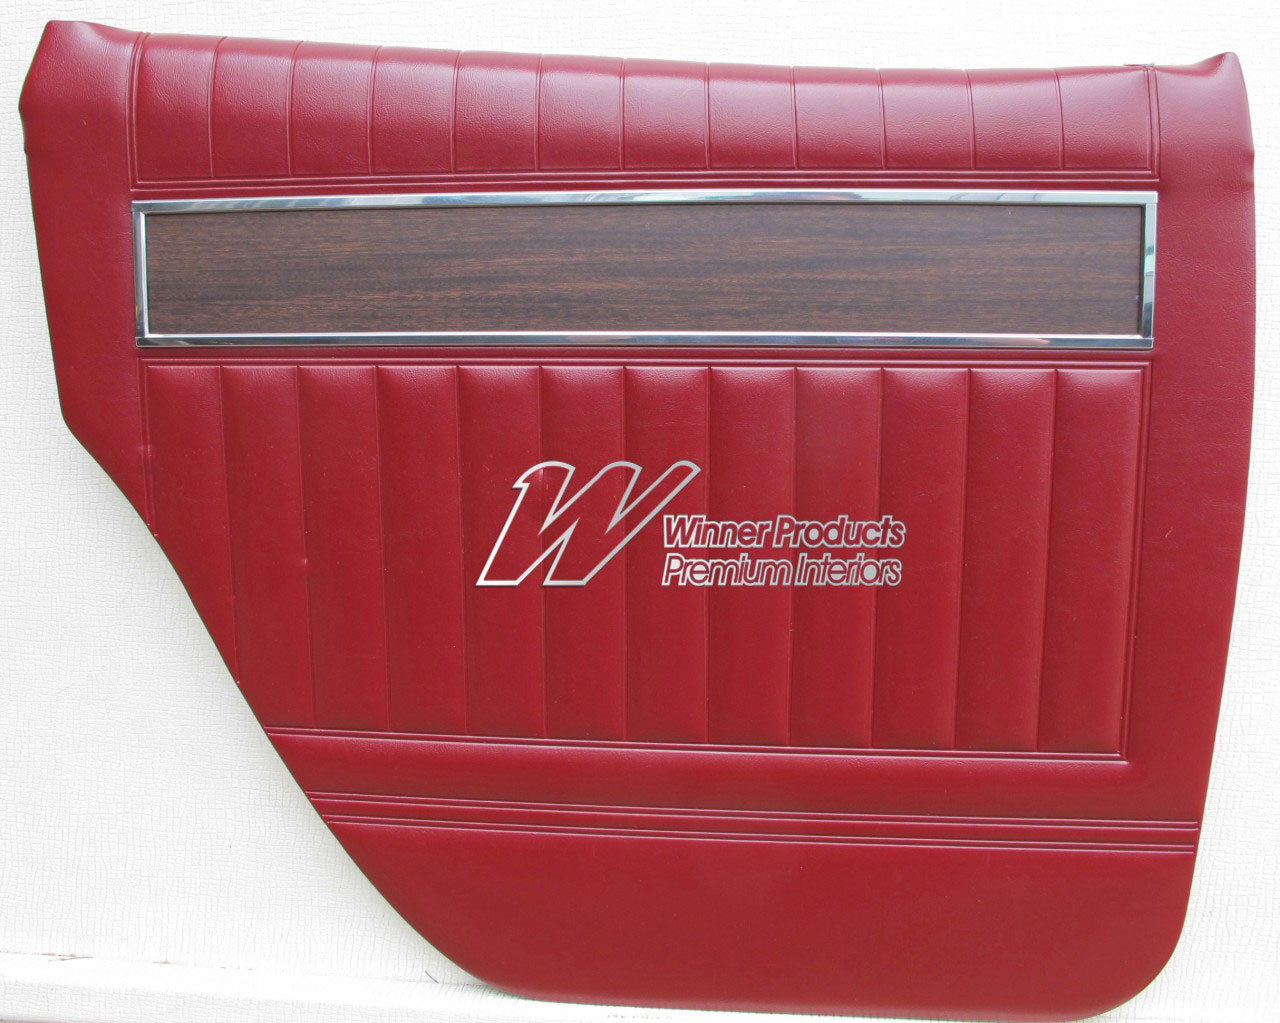 Holden Premier HK Premier Wagon 12R Yulunga Maroon Door Trims (Image 3 of 5)